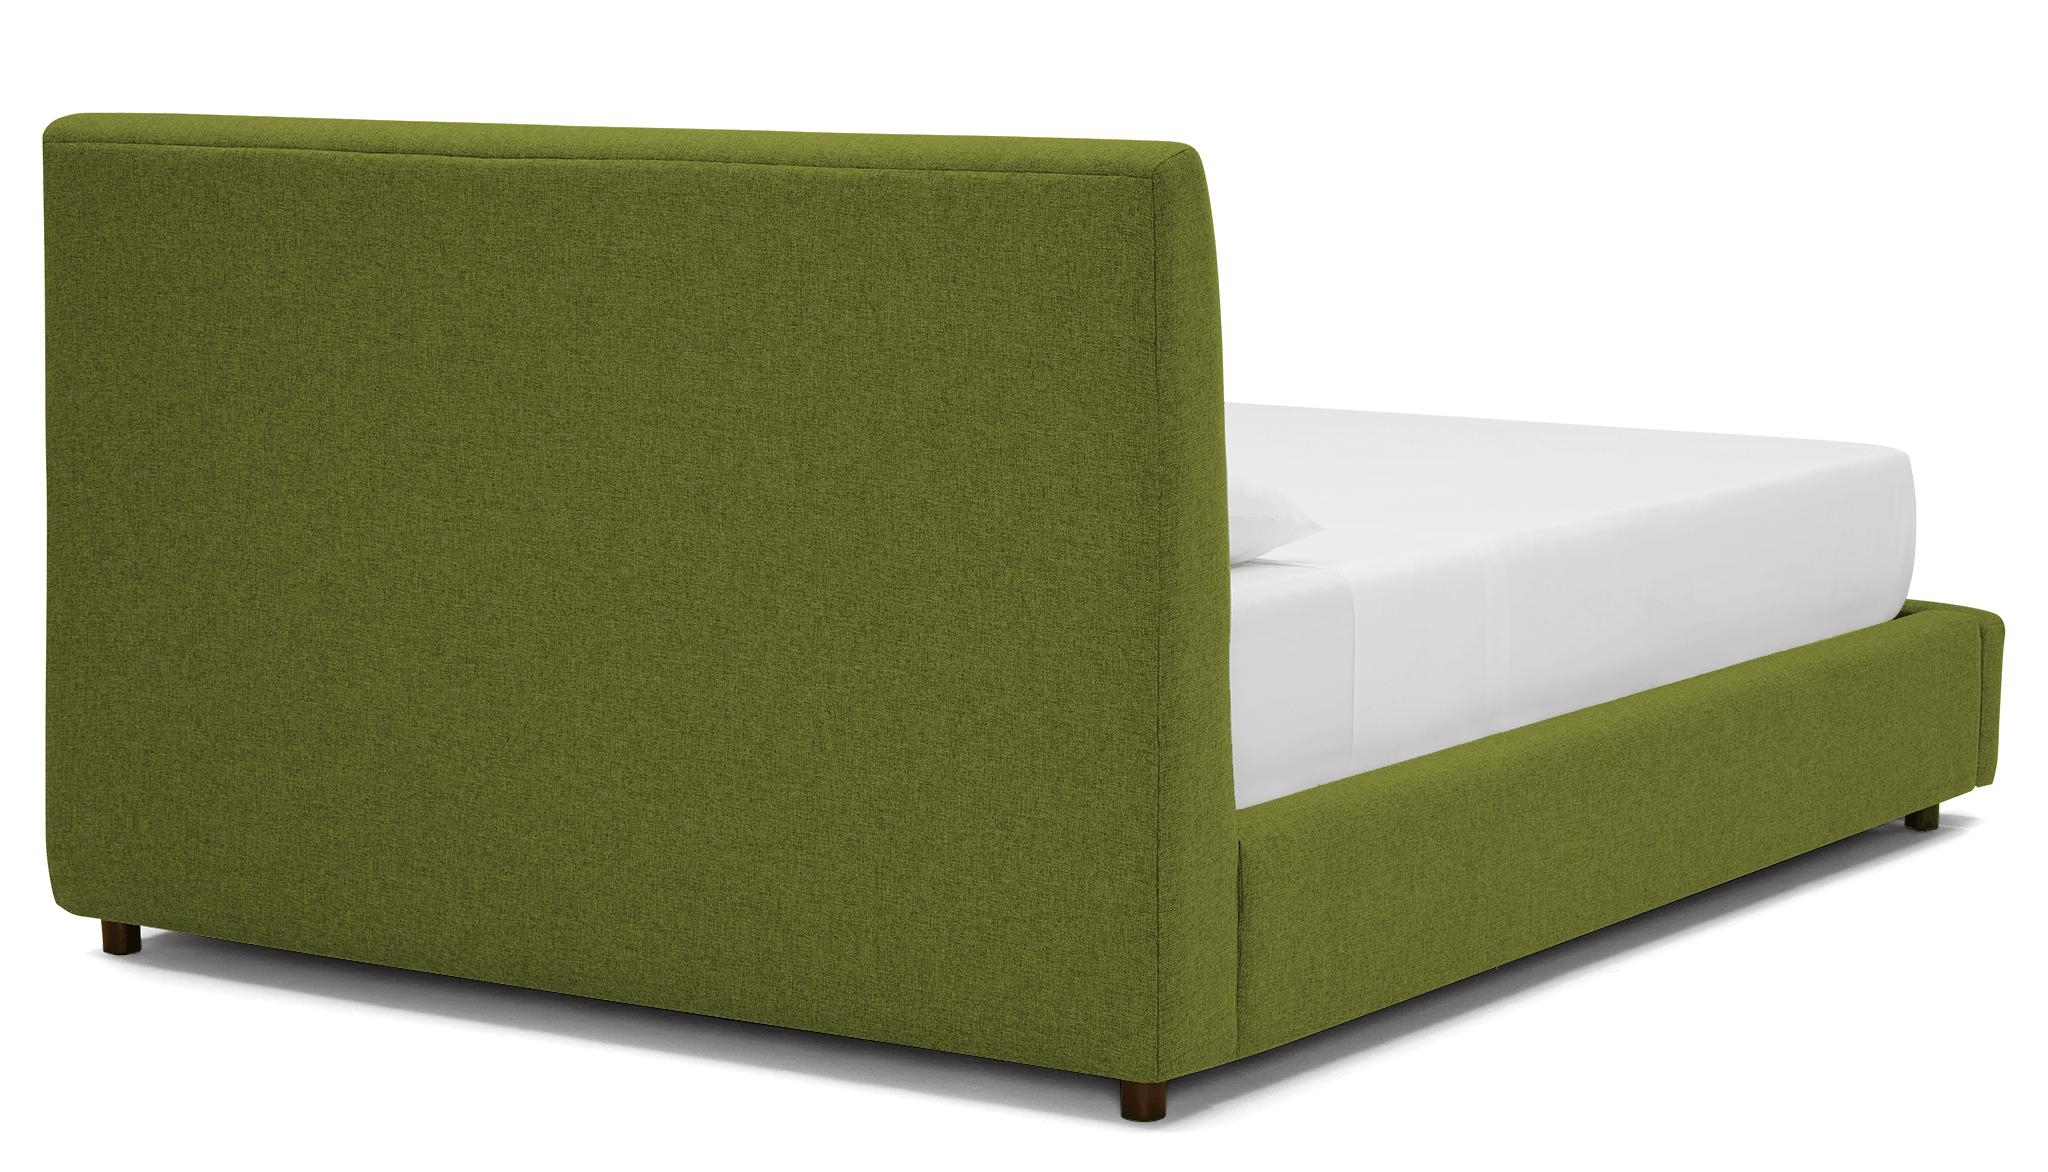 Green Alvin Mid Century Modern Storage Bed - Royale Apple - Mocha - Queen - Image 3